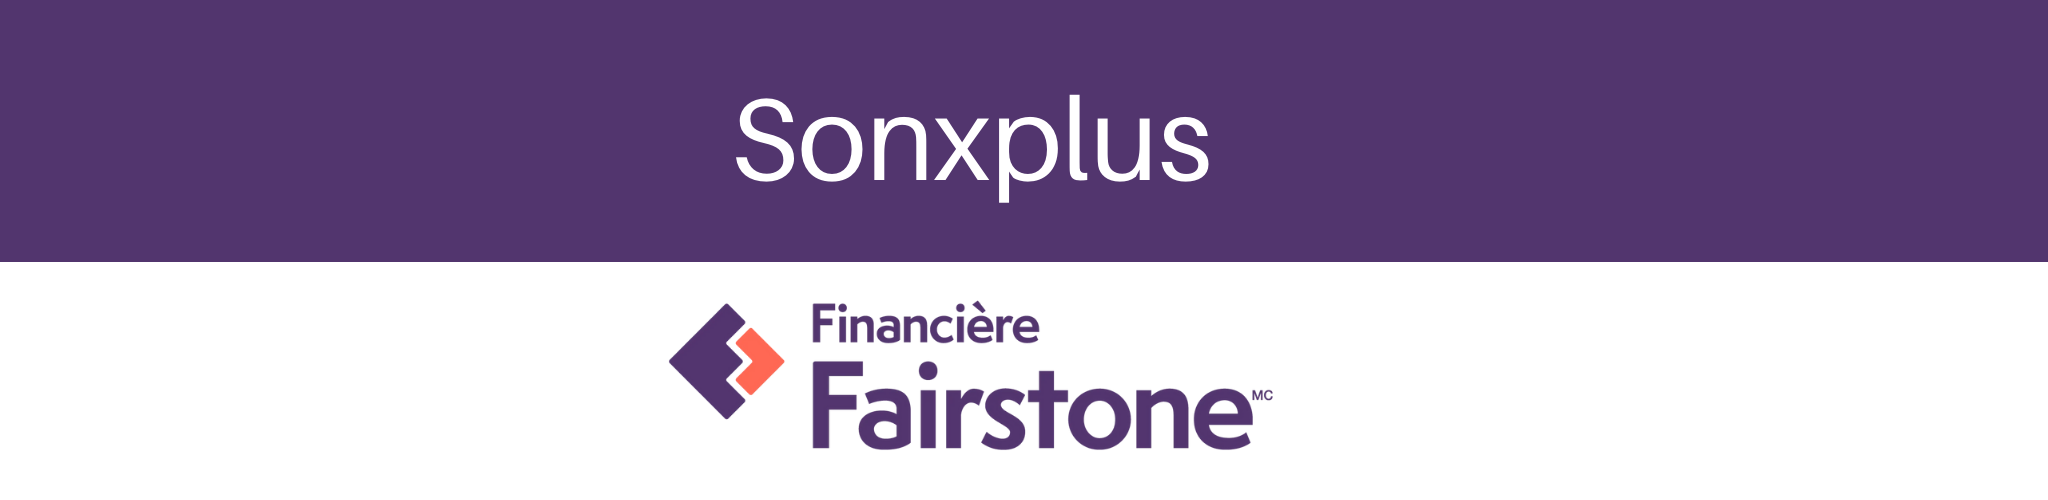 Financement Fairstone | Sonxplus Joliette